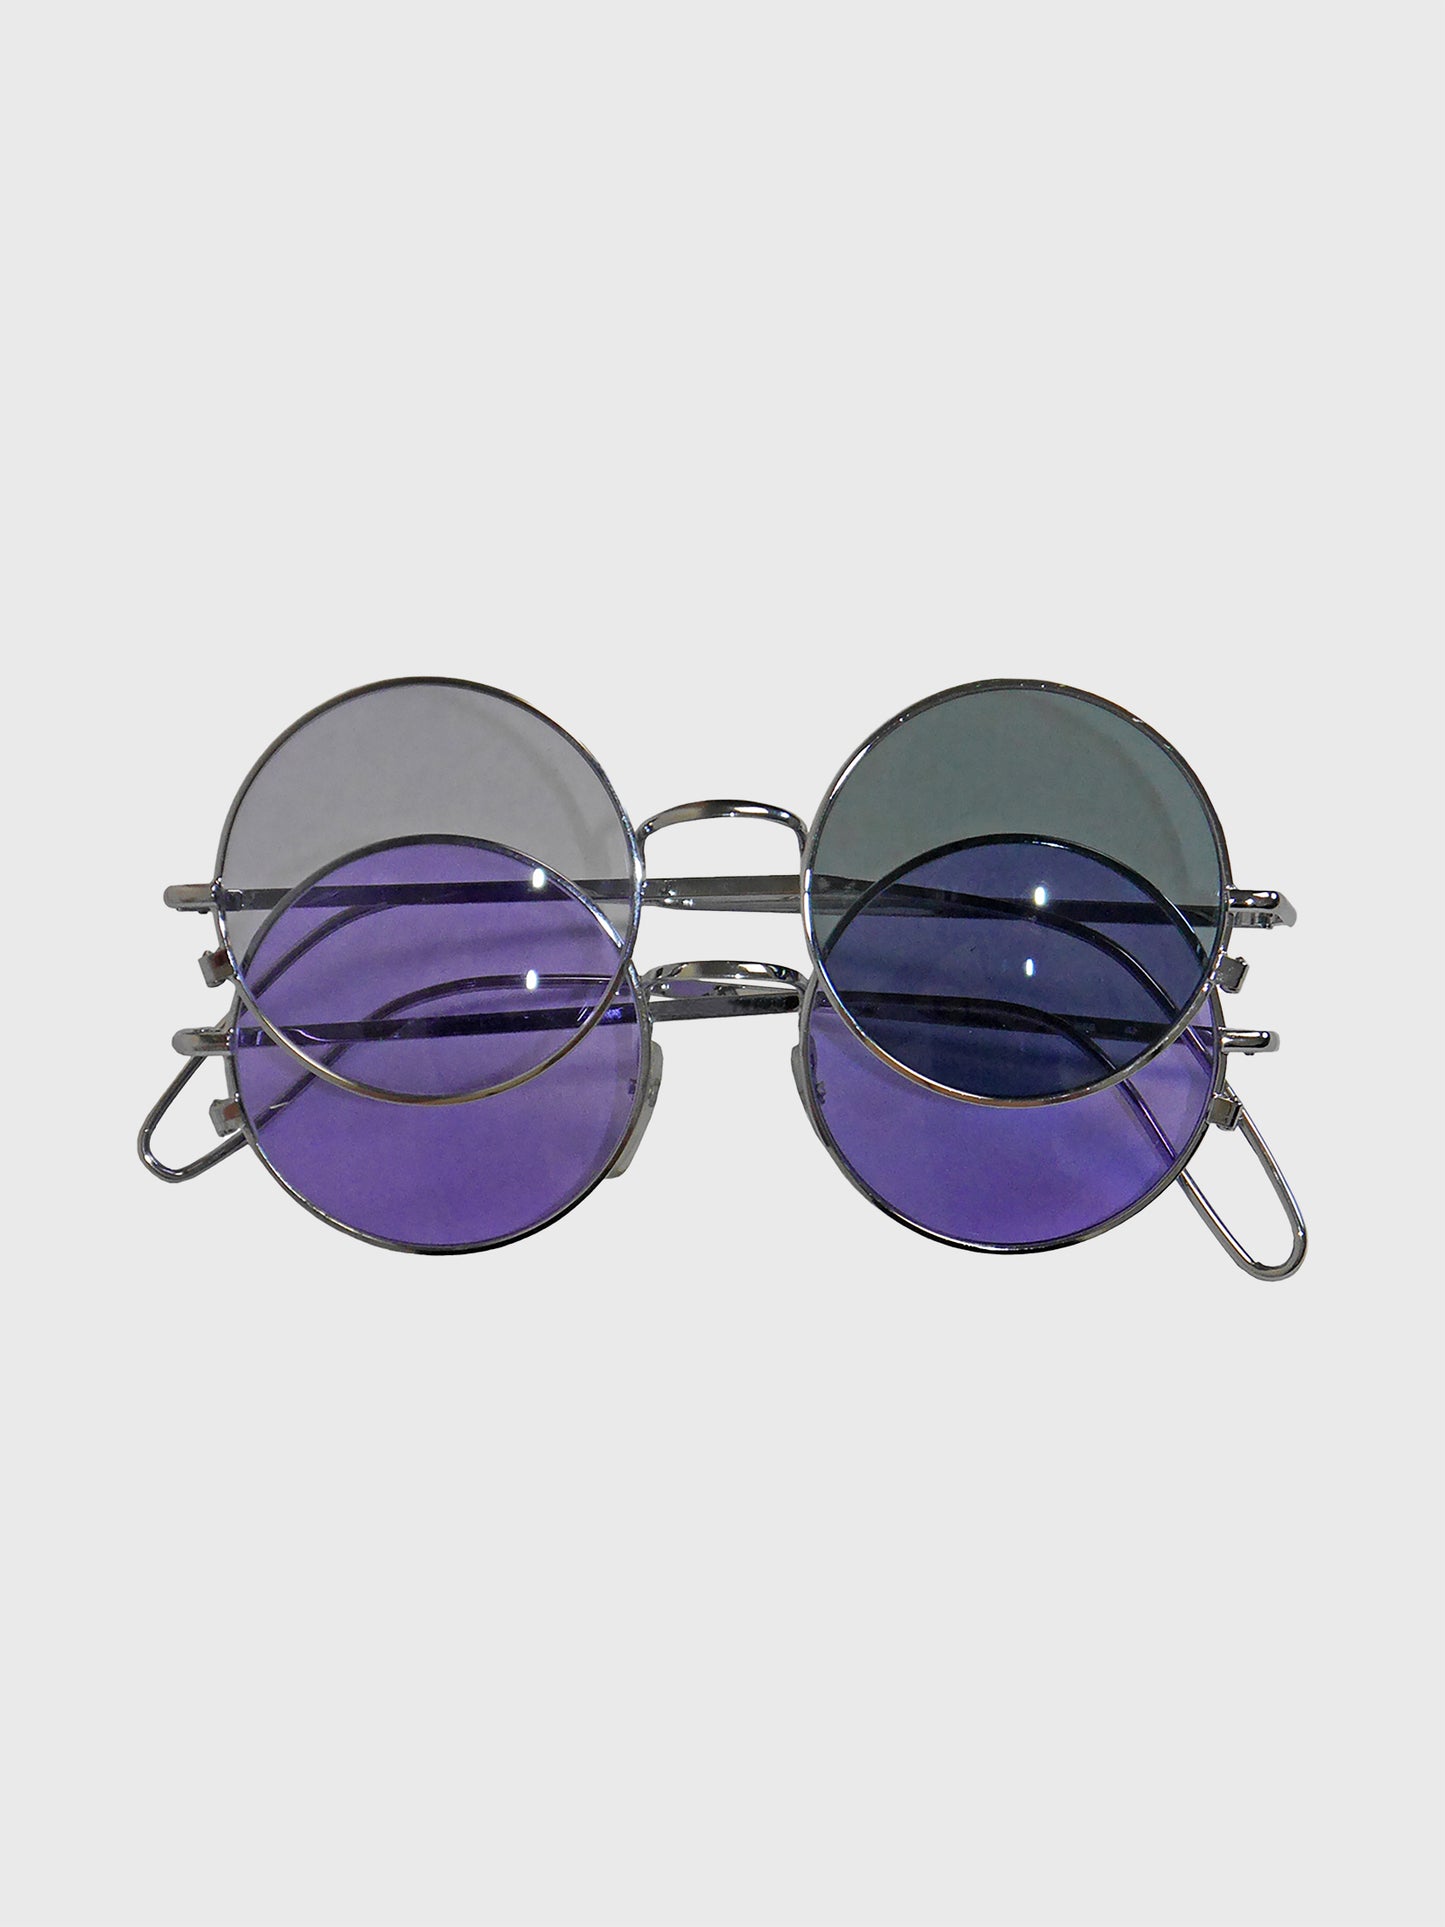 ISSEY MIYAKE Fall 1989 Vintage Round Double-Layered Sunglasses